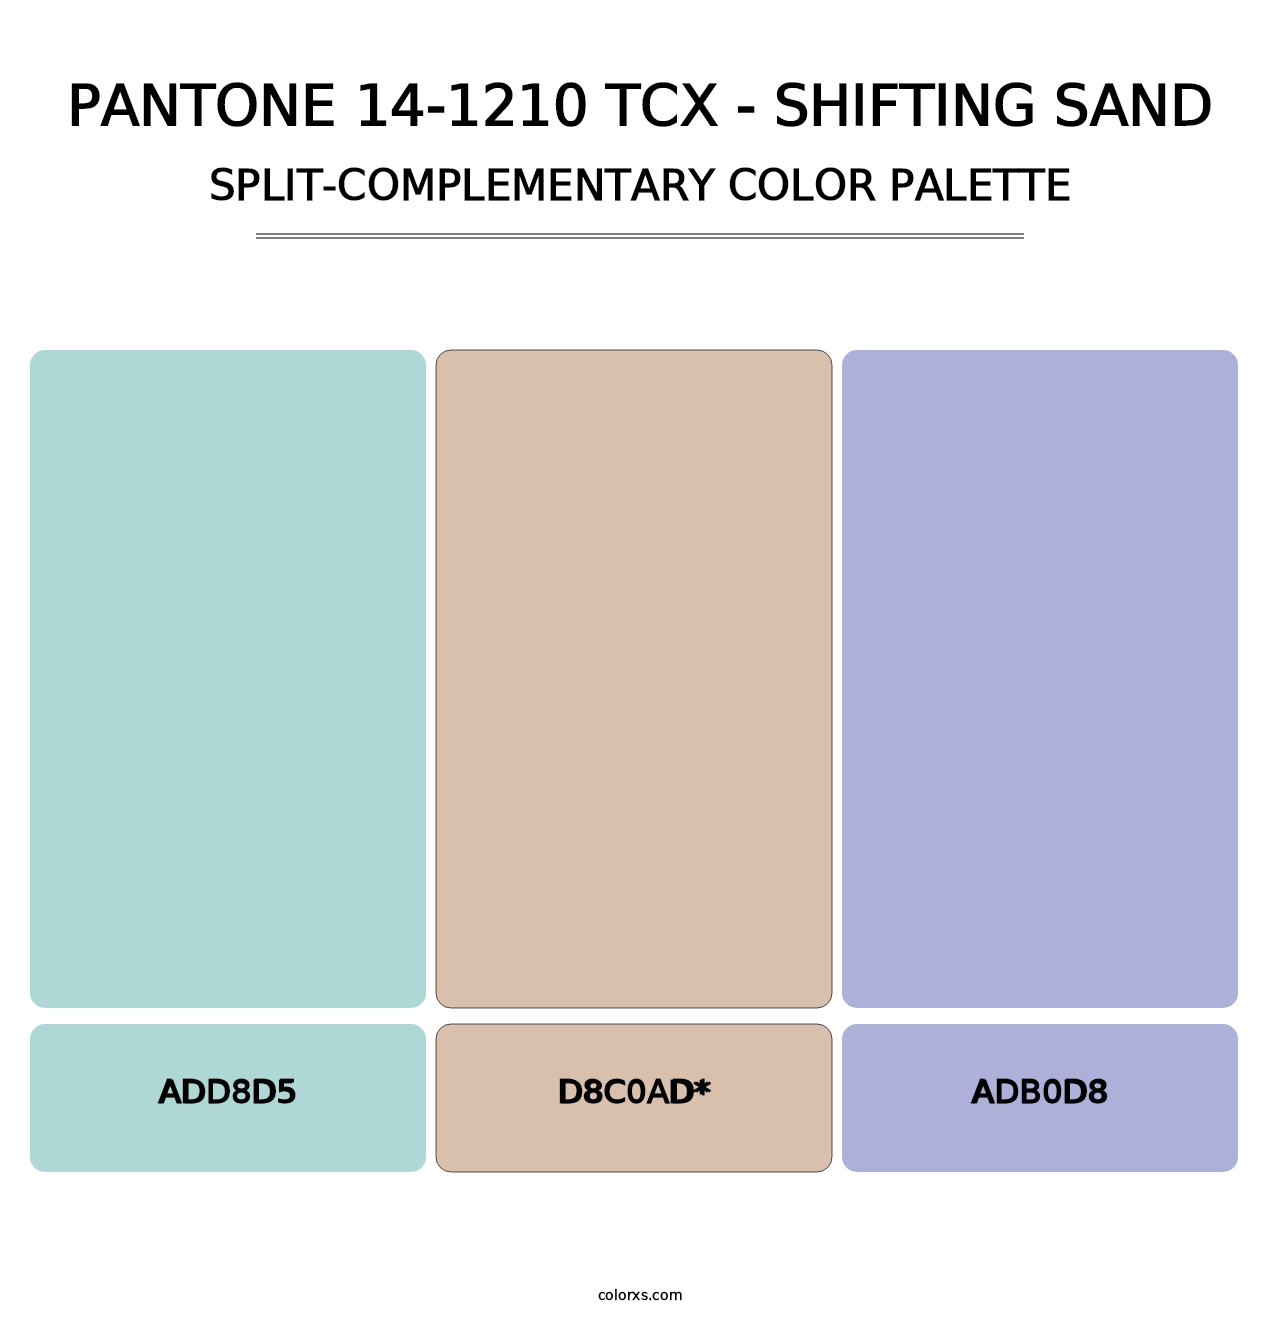 PANTONE 14-1210 TCX - Shifting Sand - Split-Complementary Color Palette